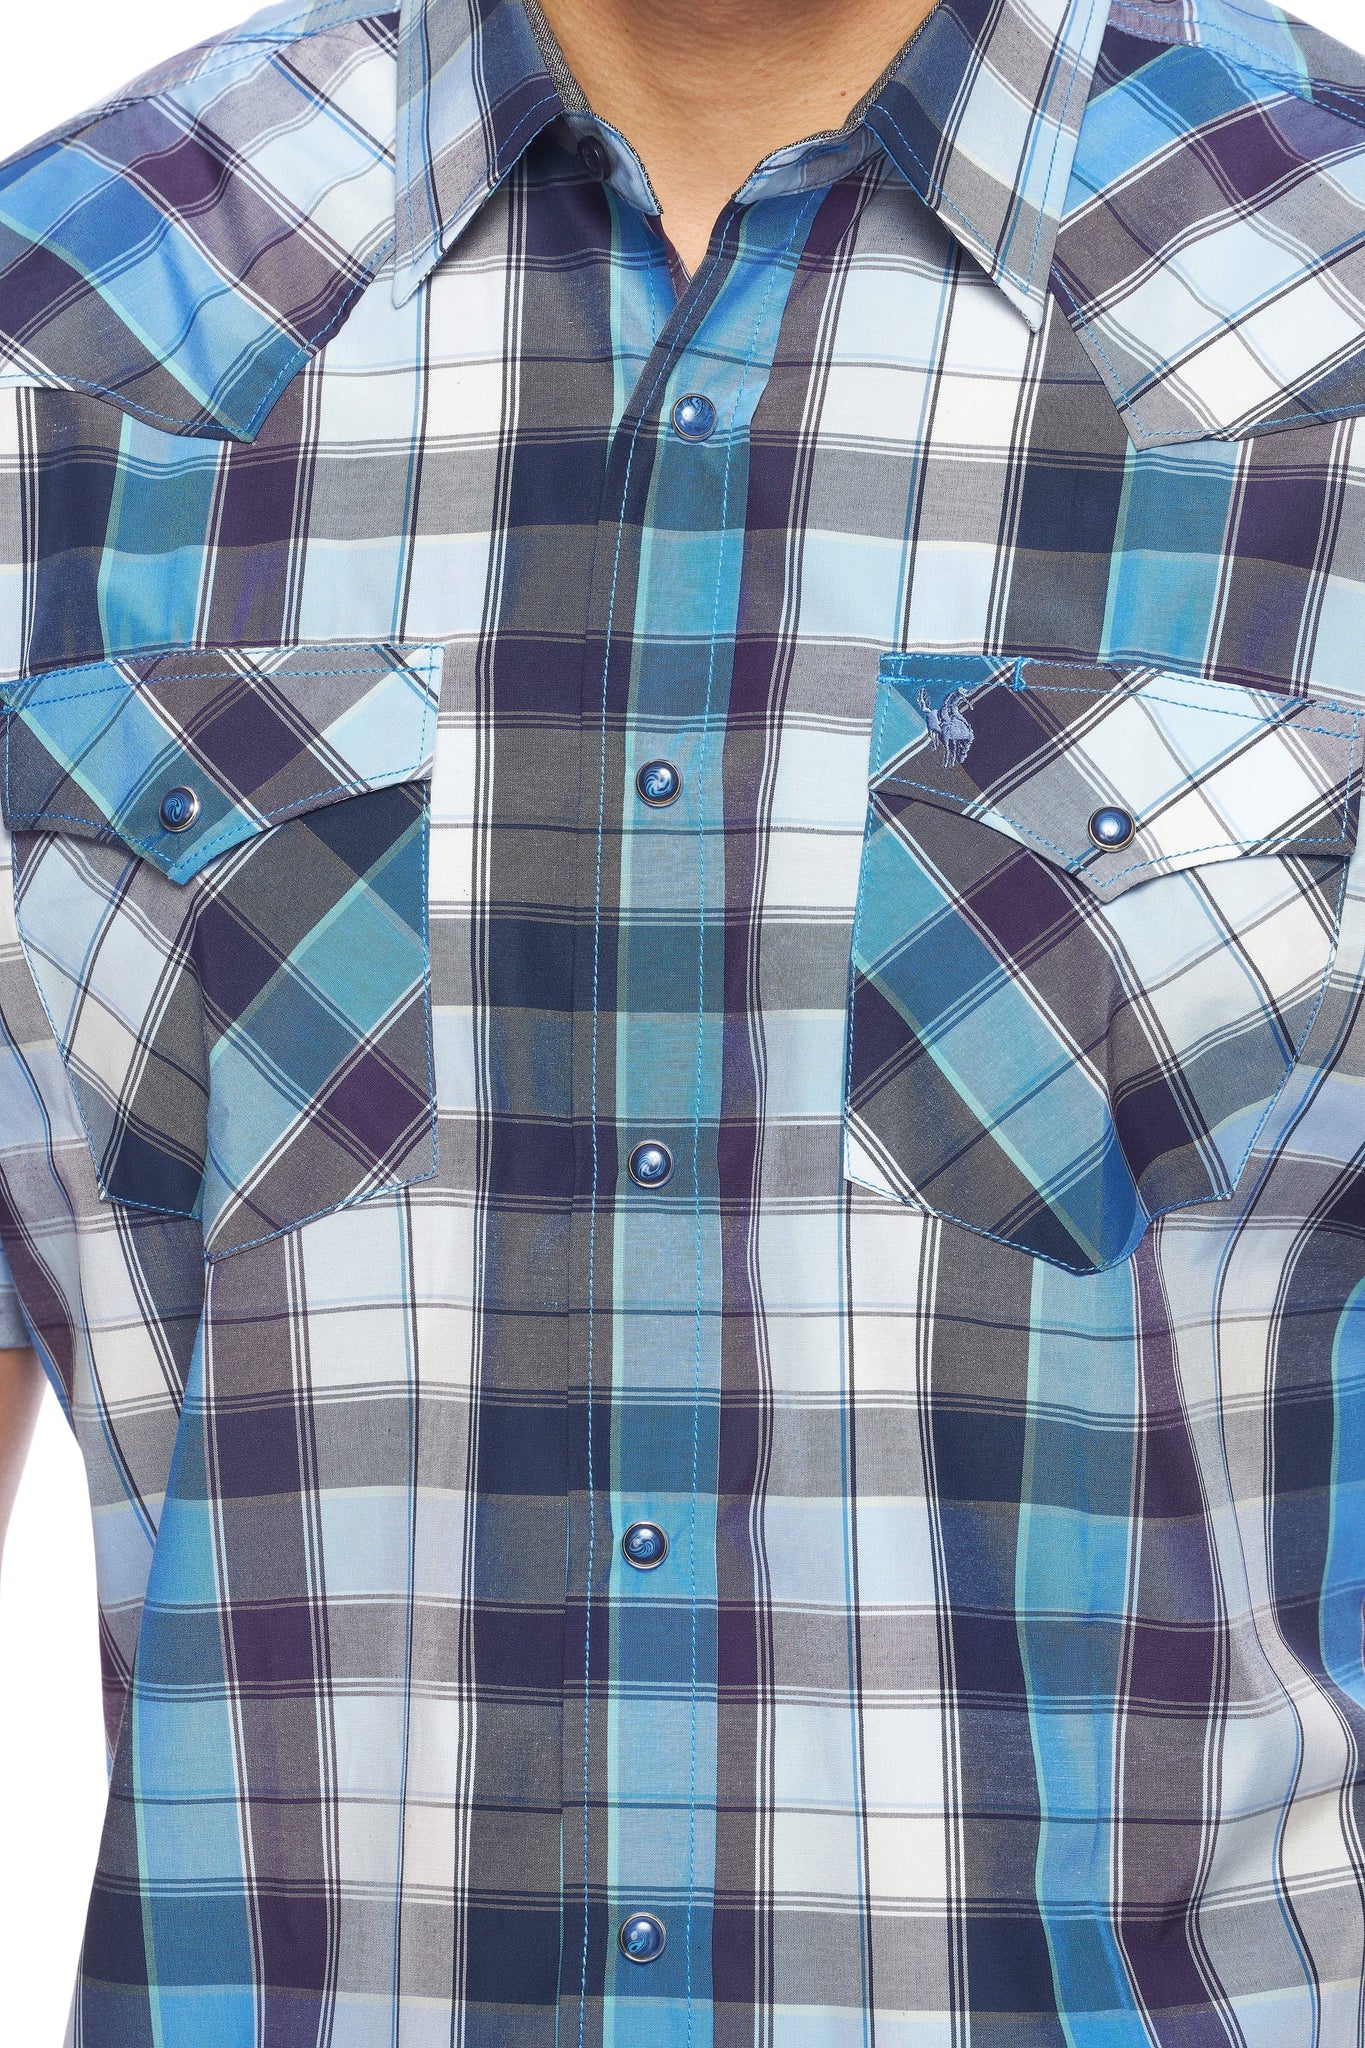 Men's Western Short Sleeve Pearl Snaps Plaid Shirt -PS400S-468